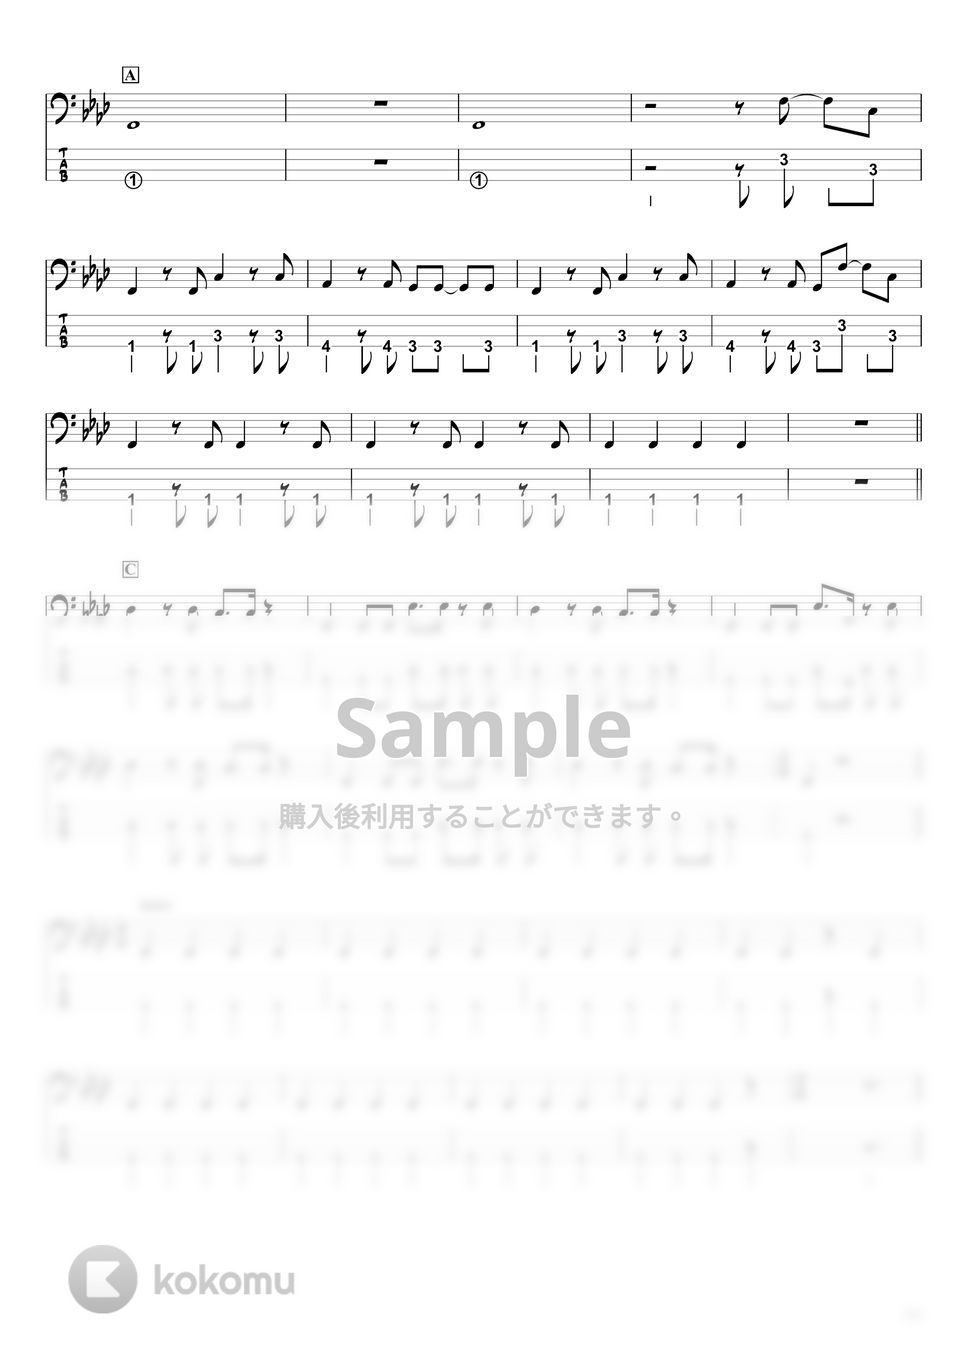 Ado - 踊 (ベースTAB譜☆4弦ベース対応) by swbass